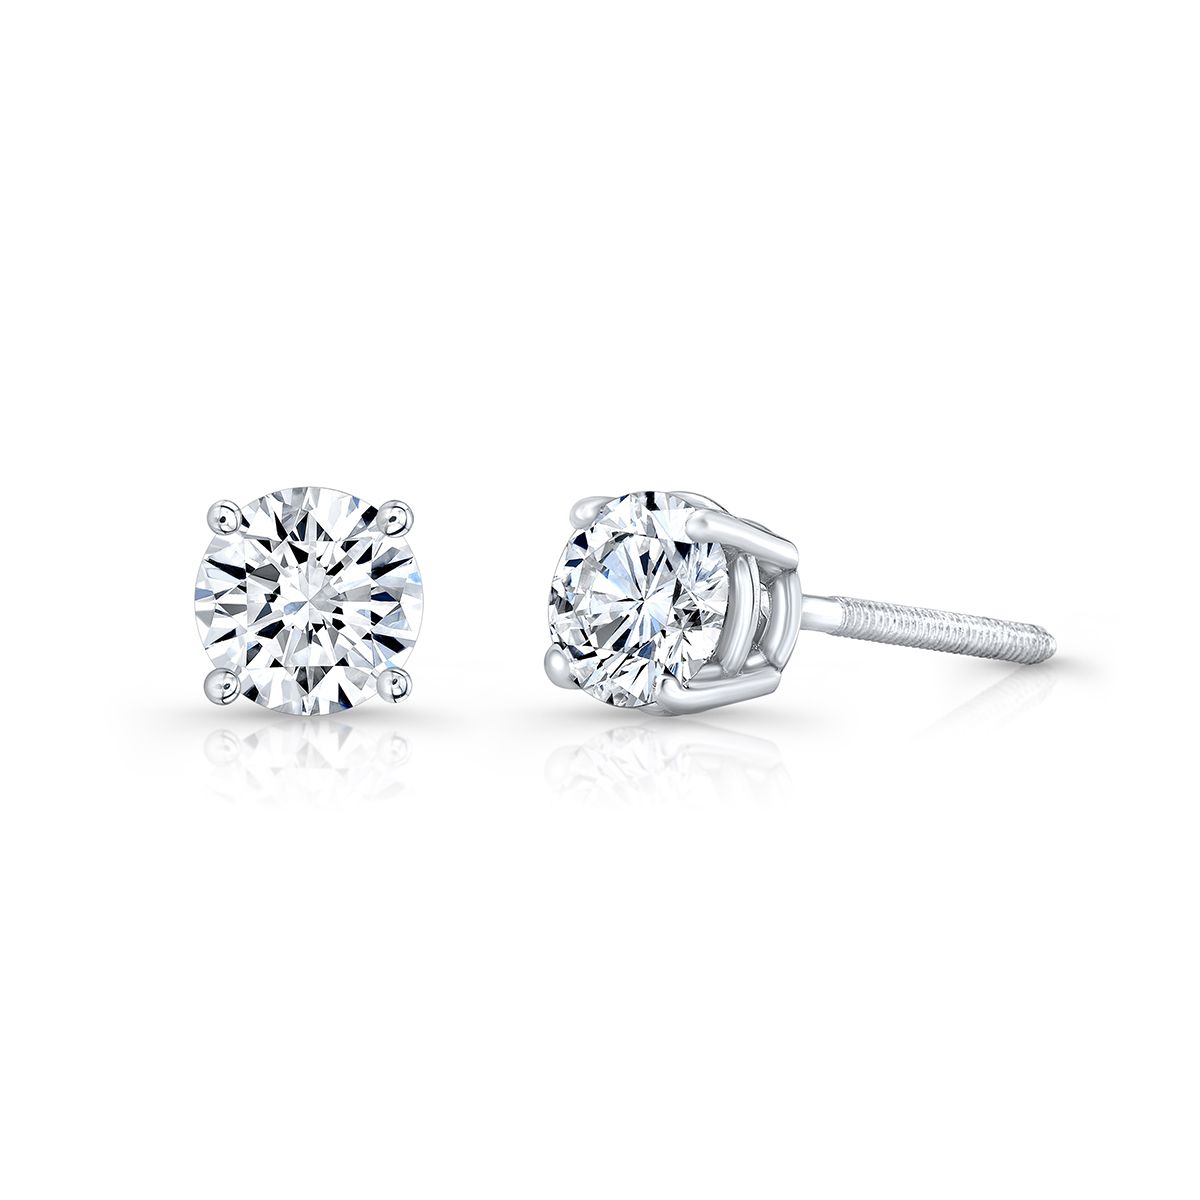 1 Carat Diamond Stud Earrings - Round Cut Diamonds 